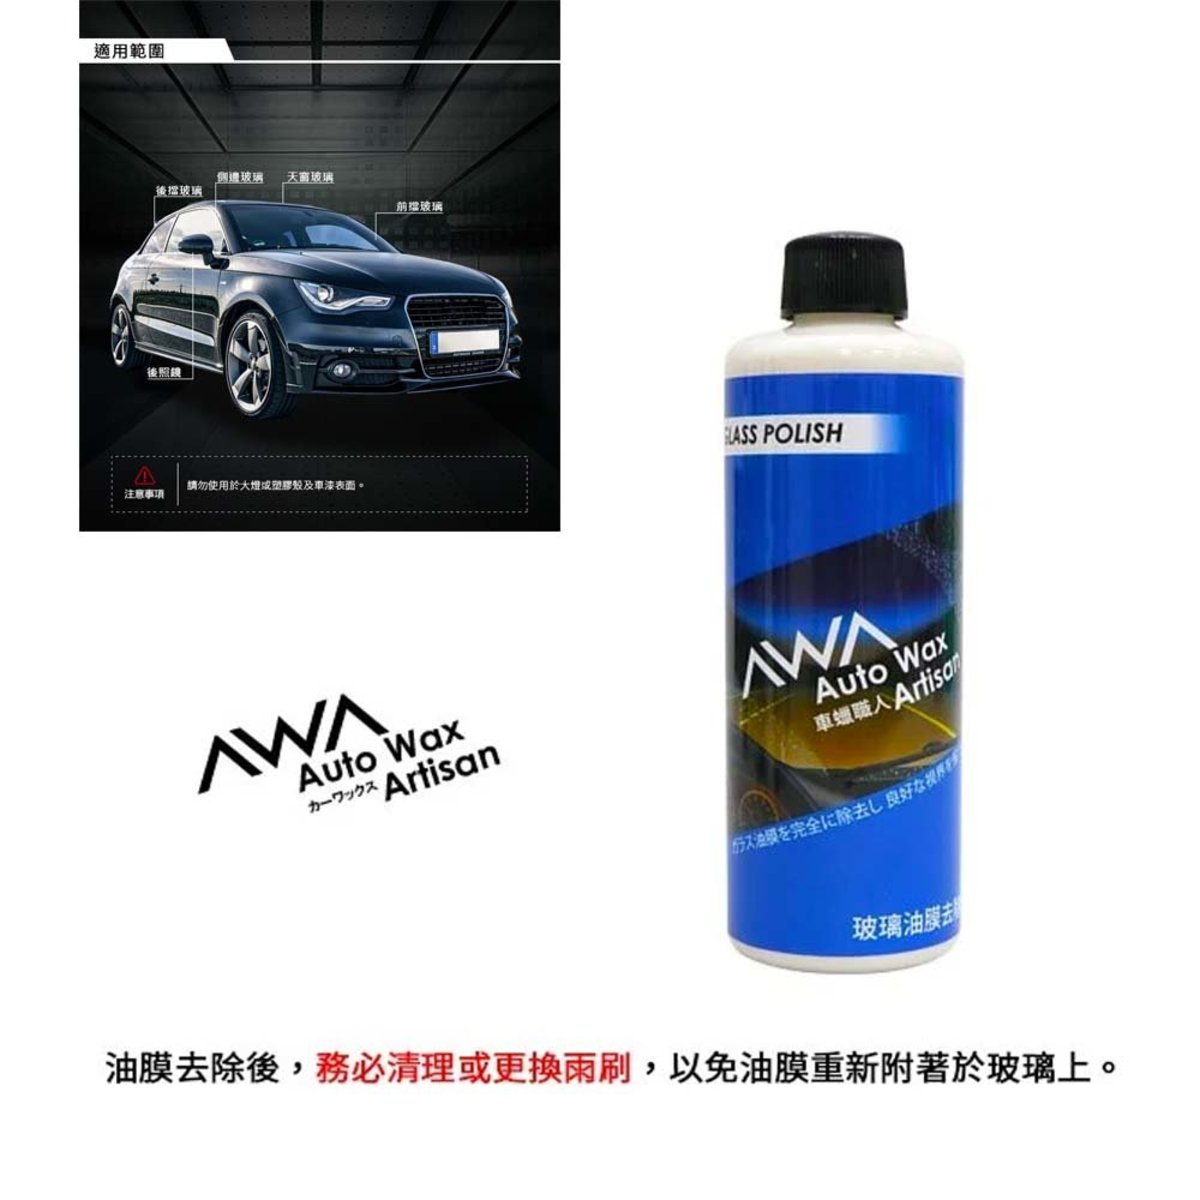 Awa車蠟職人 玻璃油膜 水垢清除劑250ml 白瓶 Hktvmall 香港最大網購平台